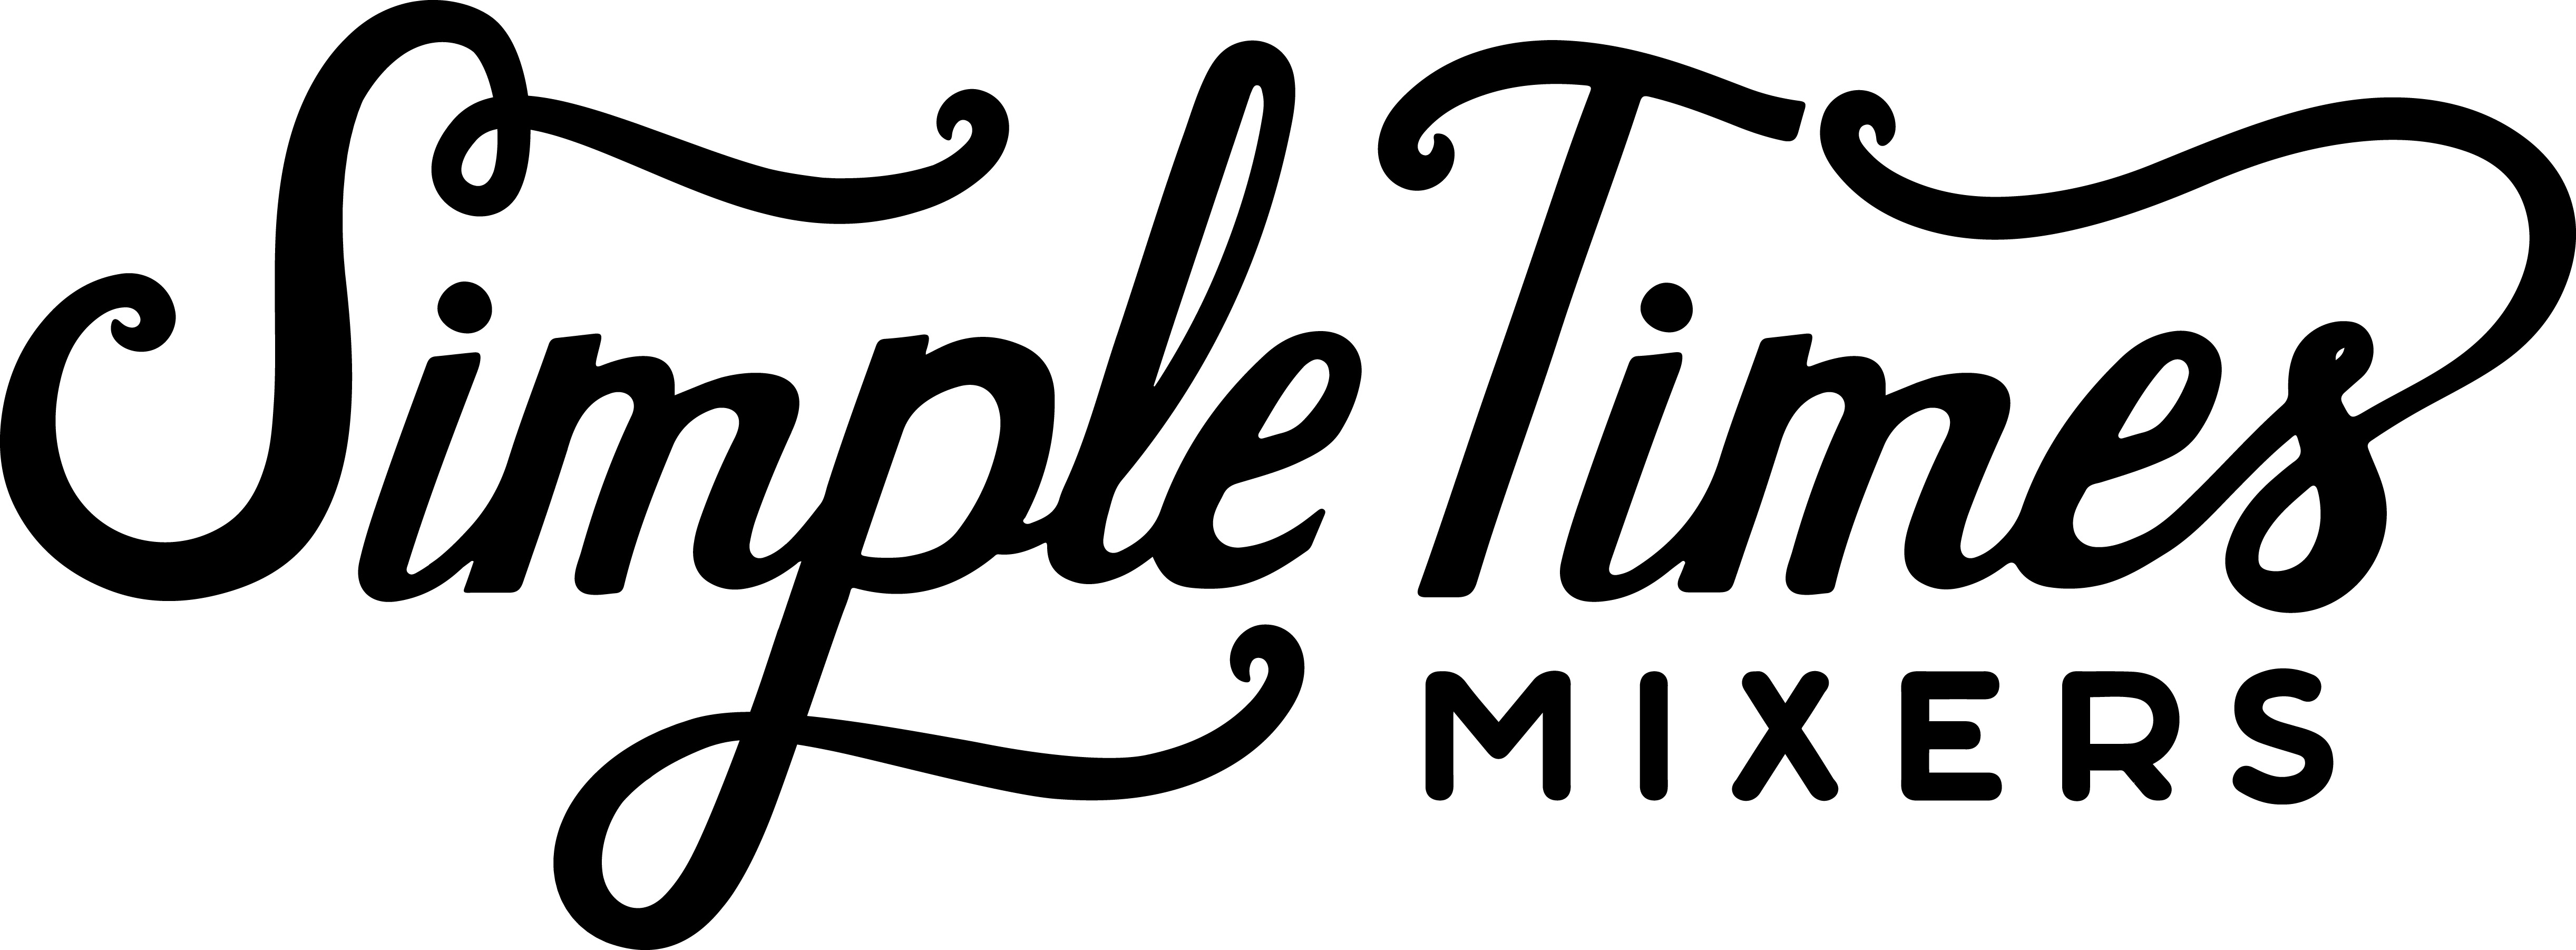 Mixer logo. Mixing logo. Mix logo. ZR Mix logo.